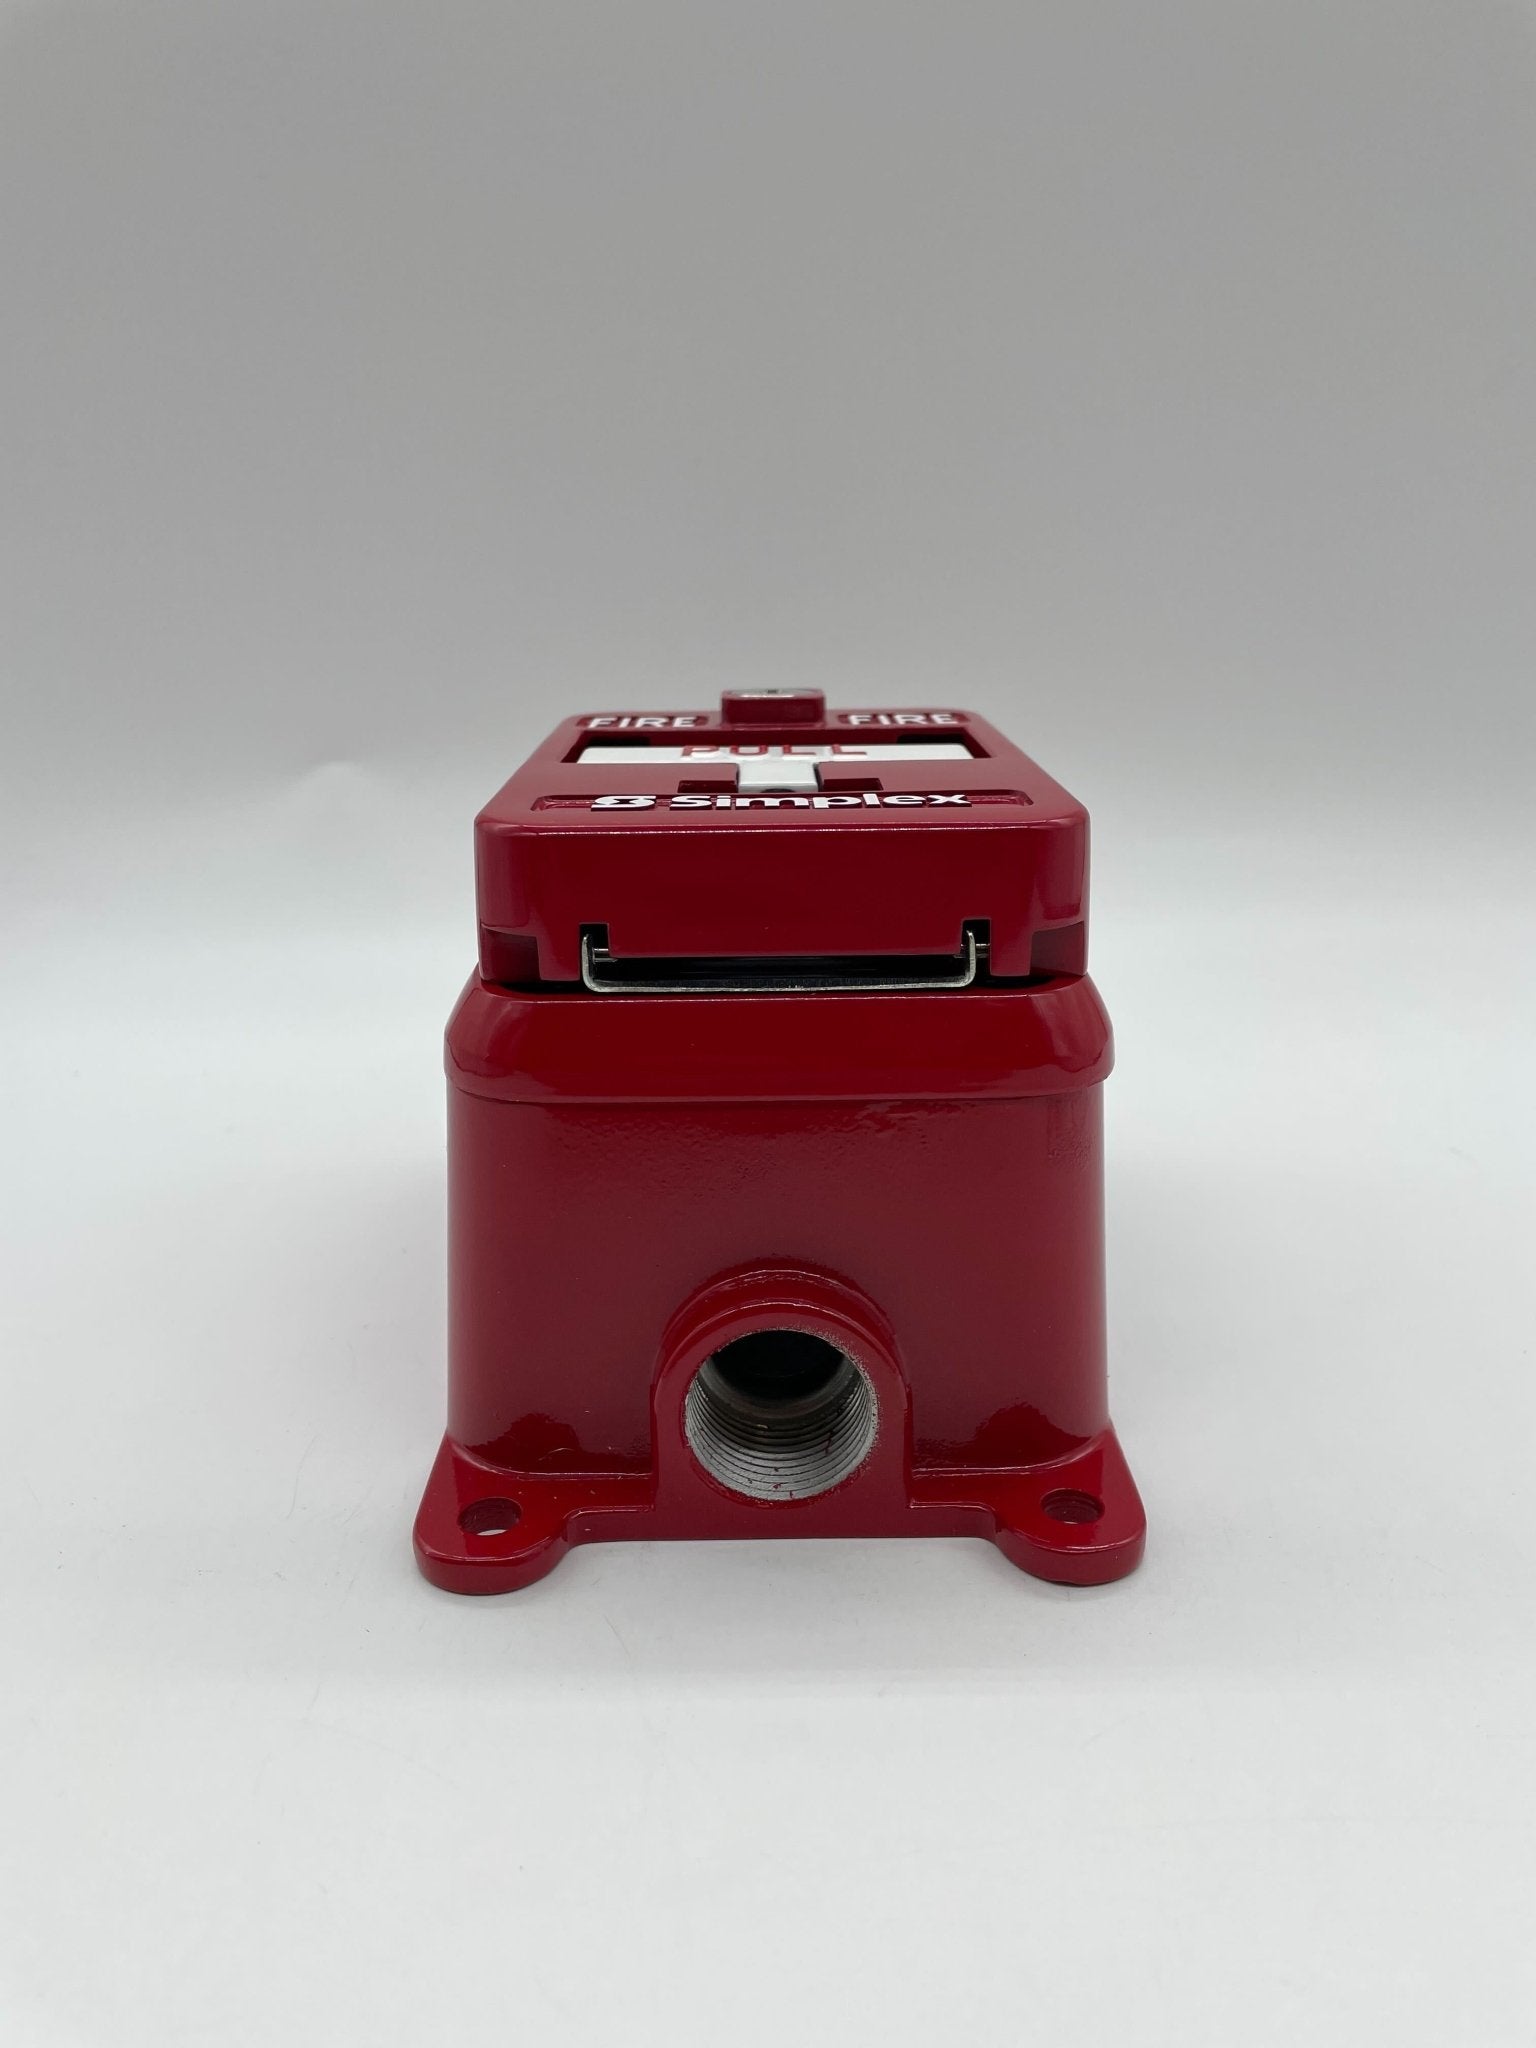 Simplex 2099-9144 - The Fire Alarm Supplier